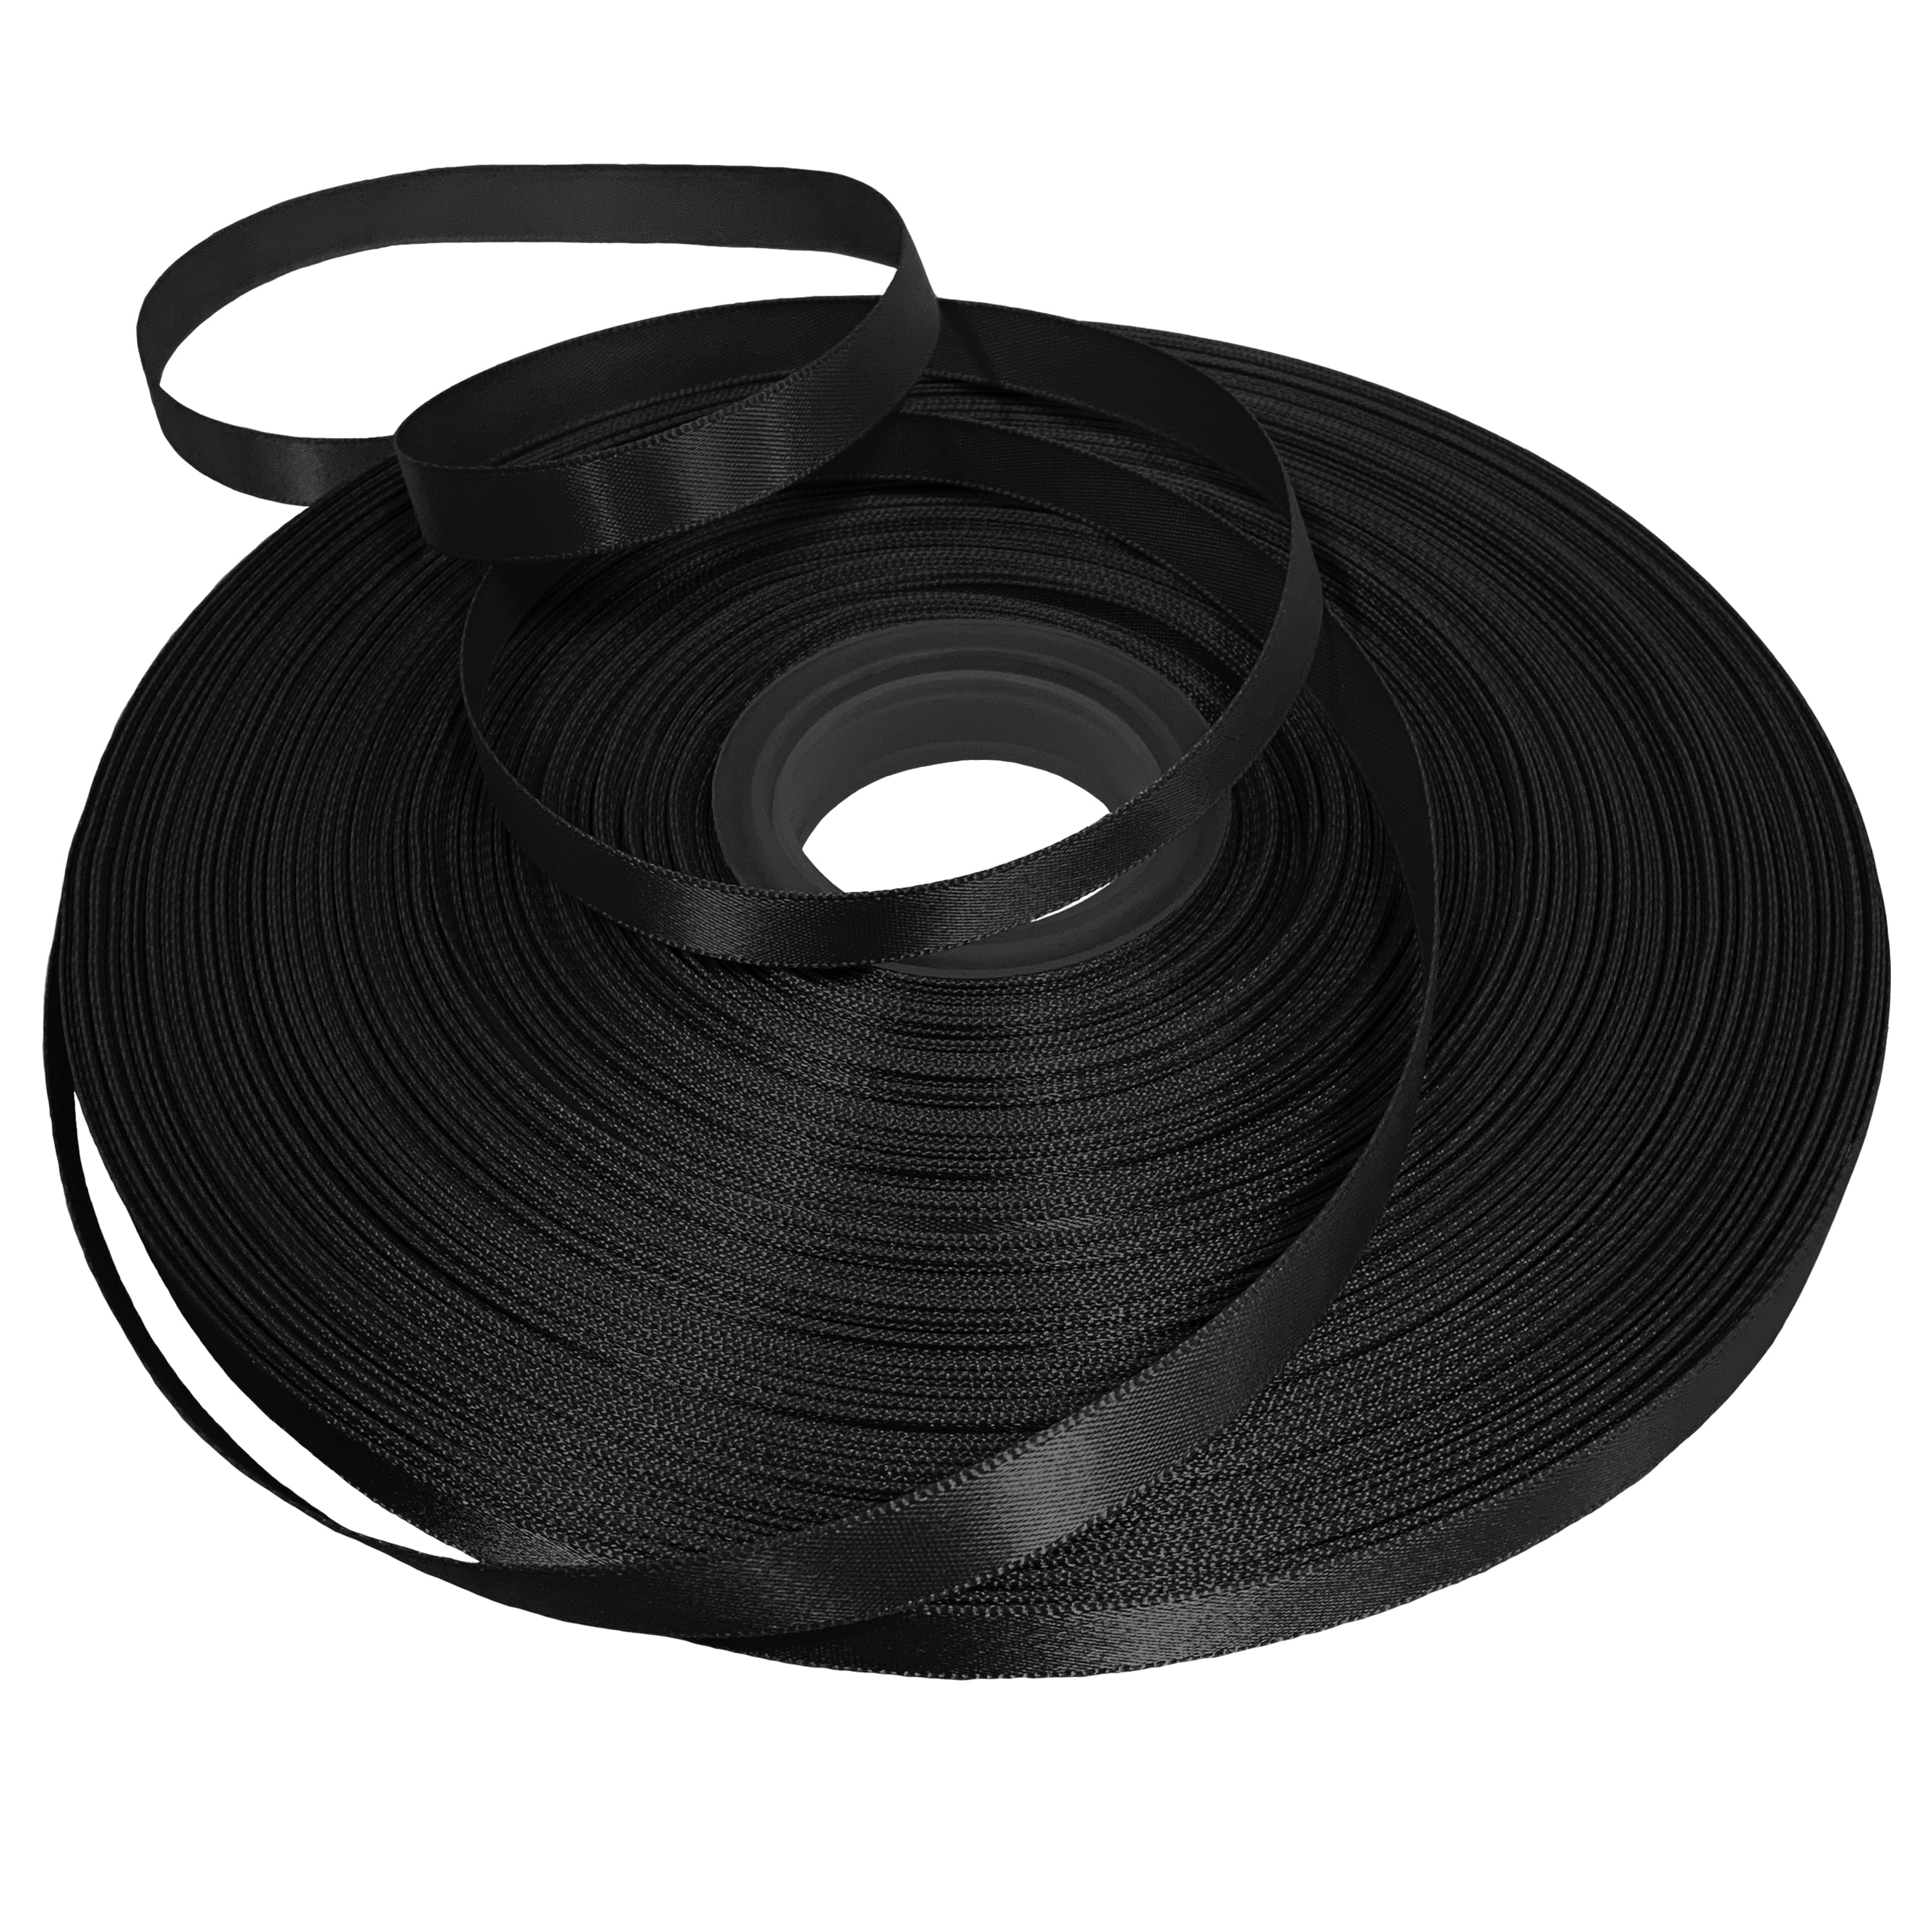 Black Paw Print Ribbon - 1 3/8 inch Wired Satin Ribbon – Flippin